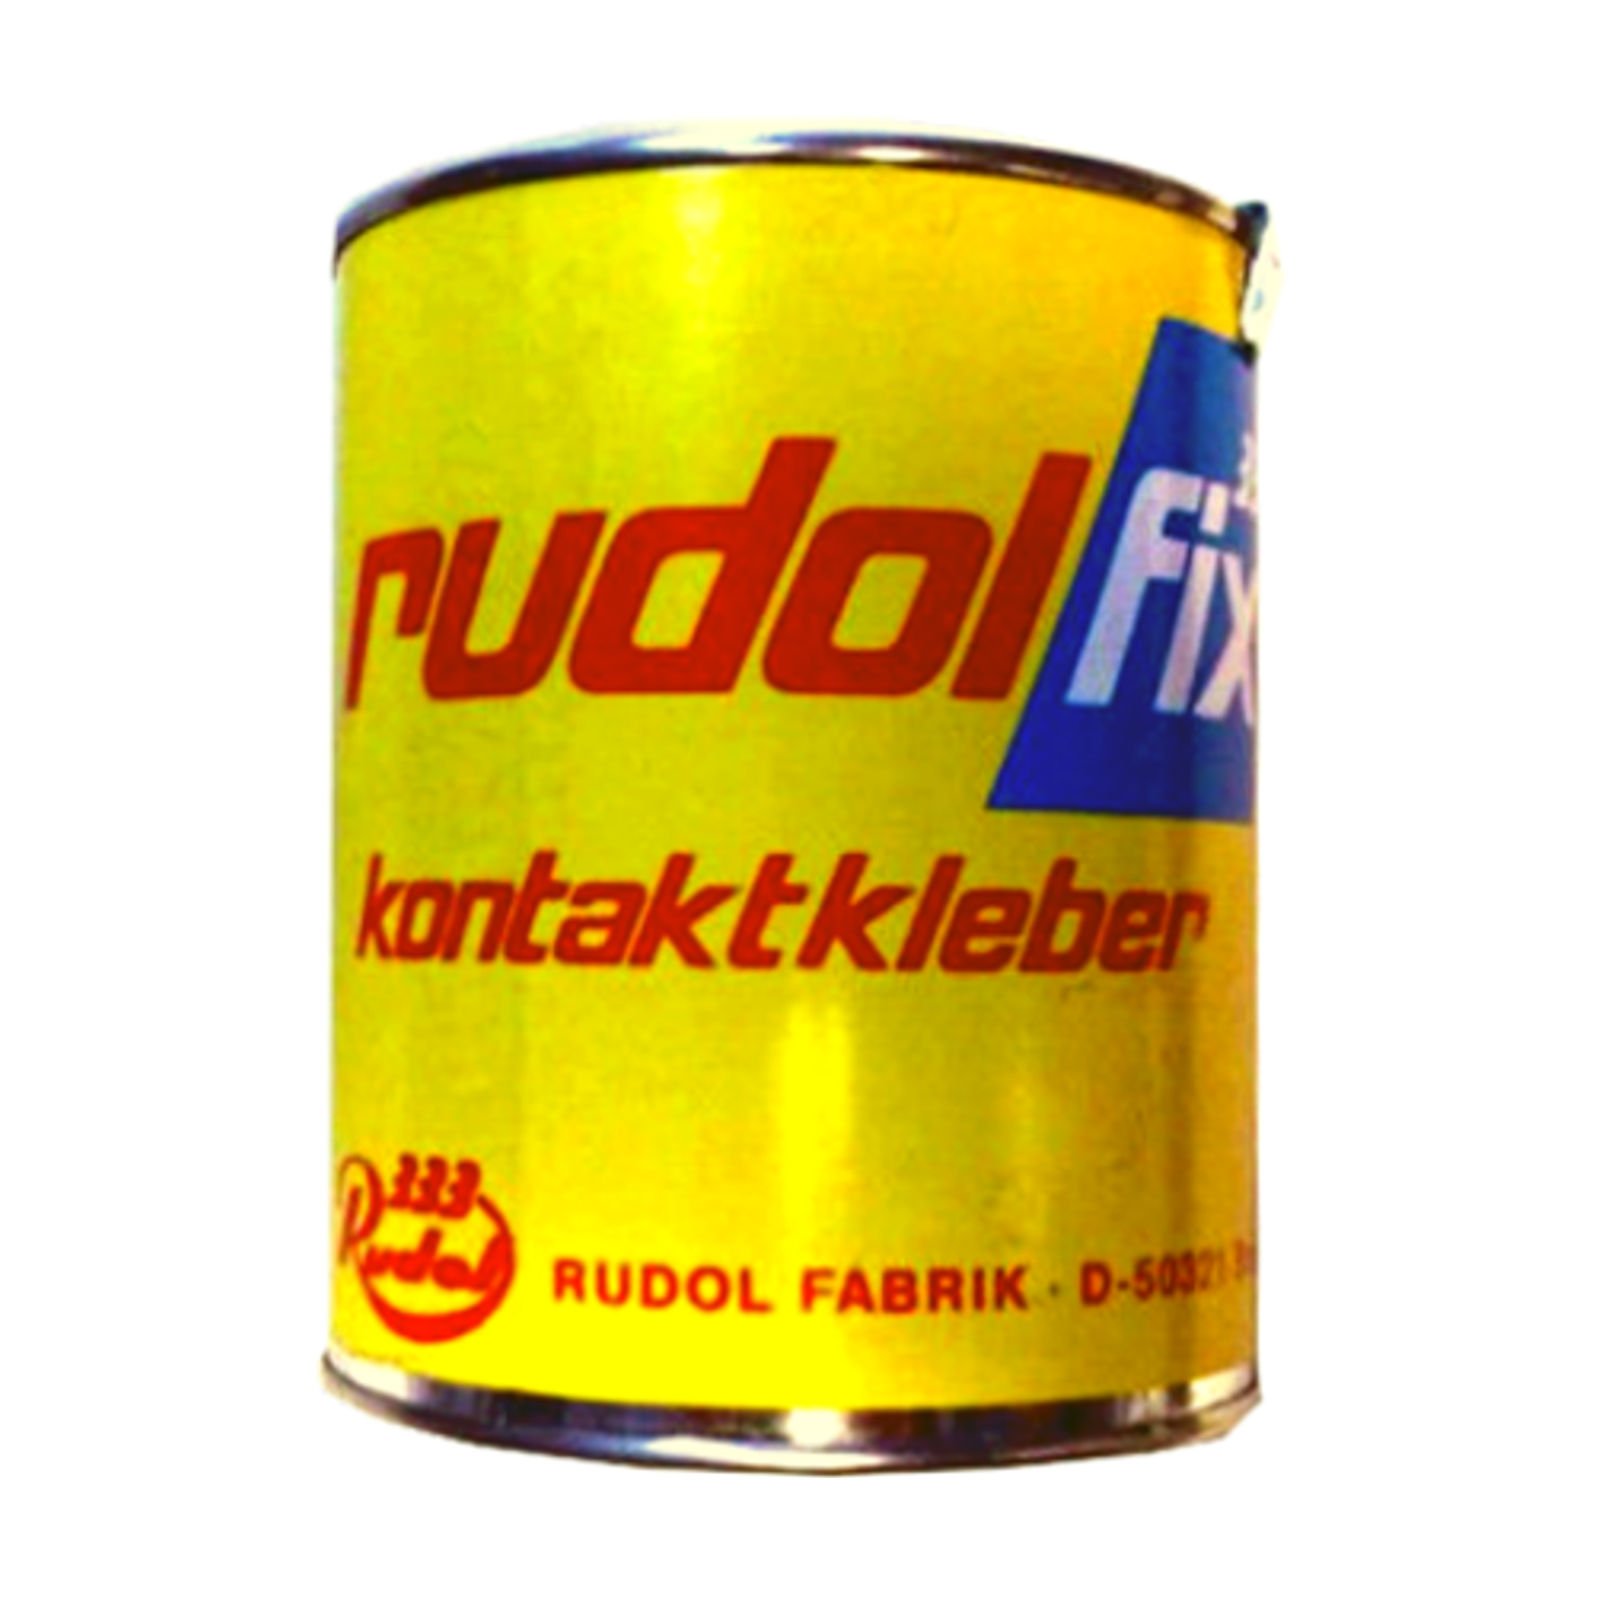 Kontaktkleber Rudolfix 333-640g (32,03 € pro Kg)